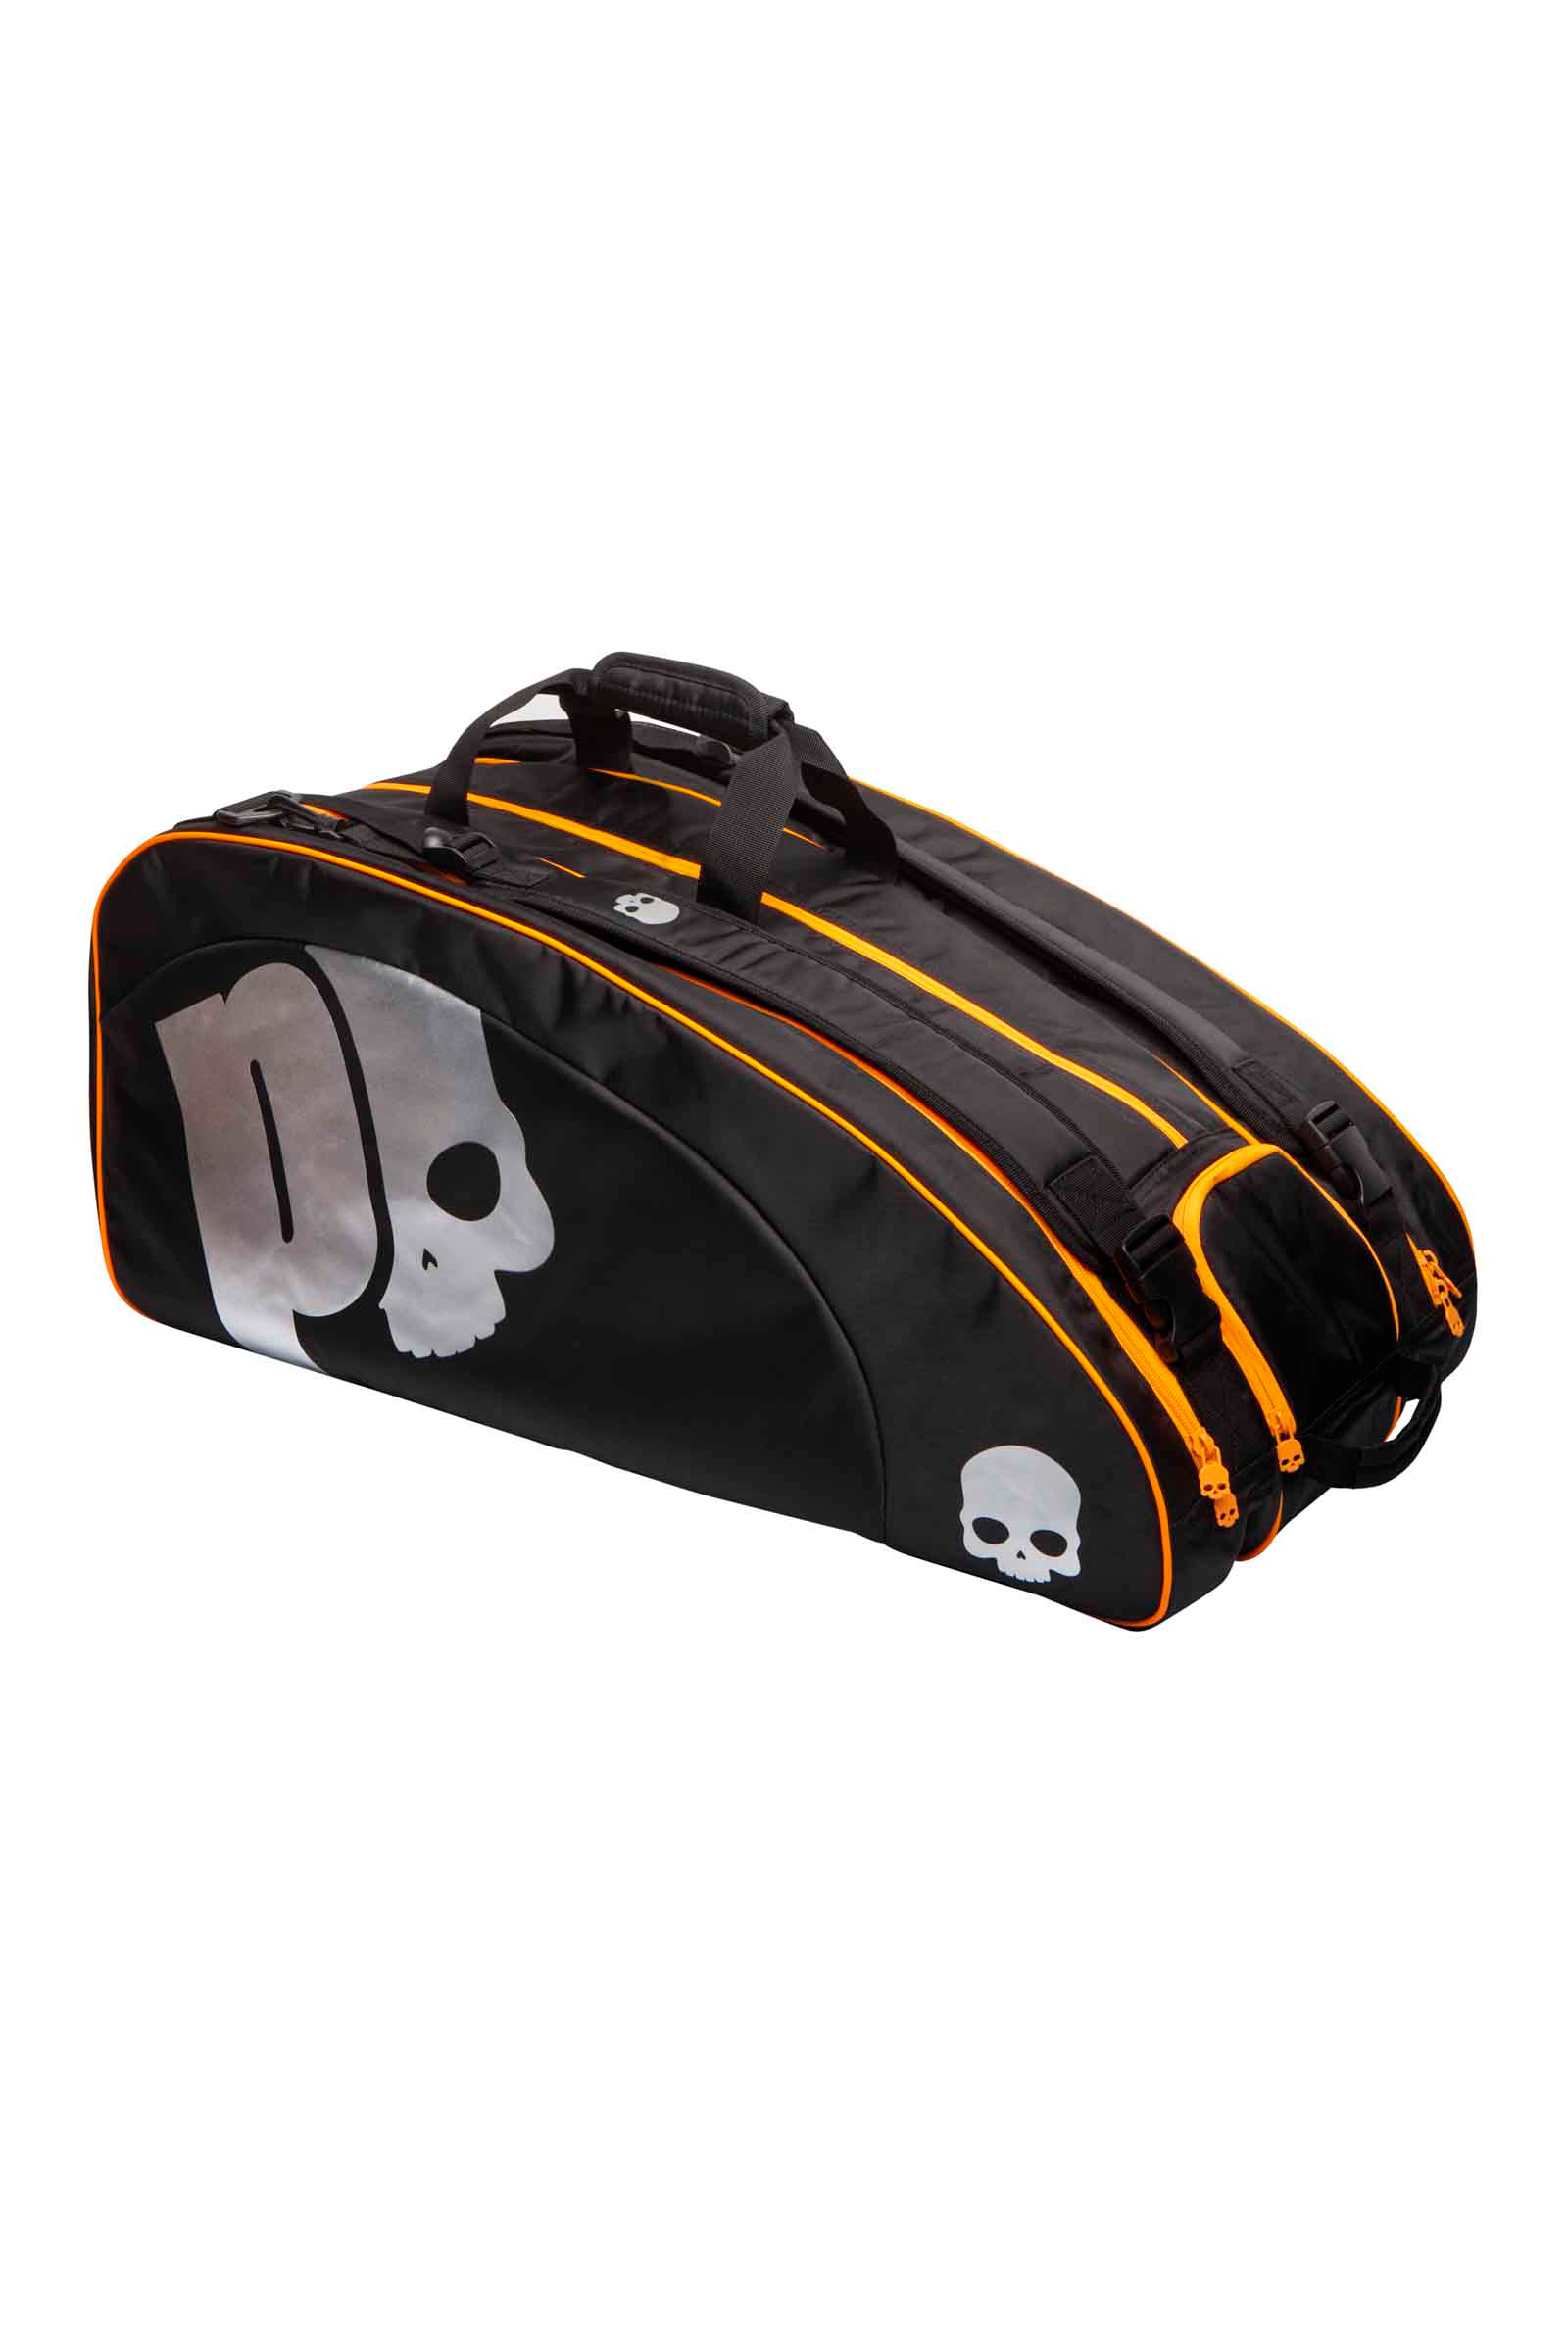 CHROME BAG PRINCE BY HYDROGEN - BLACK,ORANGE - Abbigliamento sportivo | Hydrogen